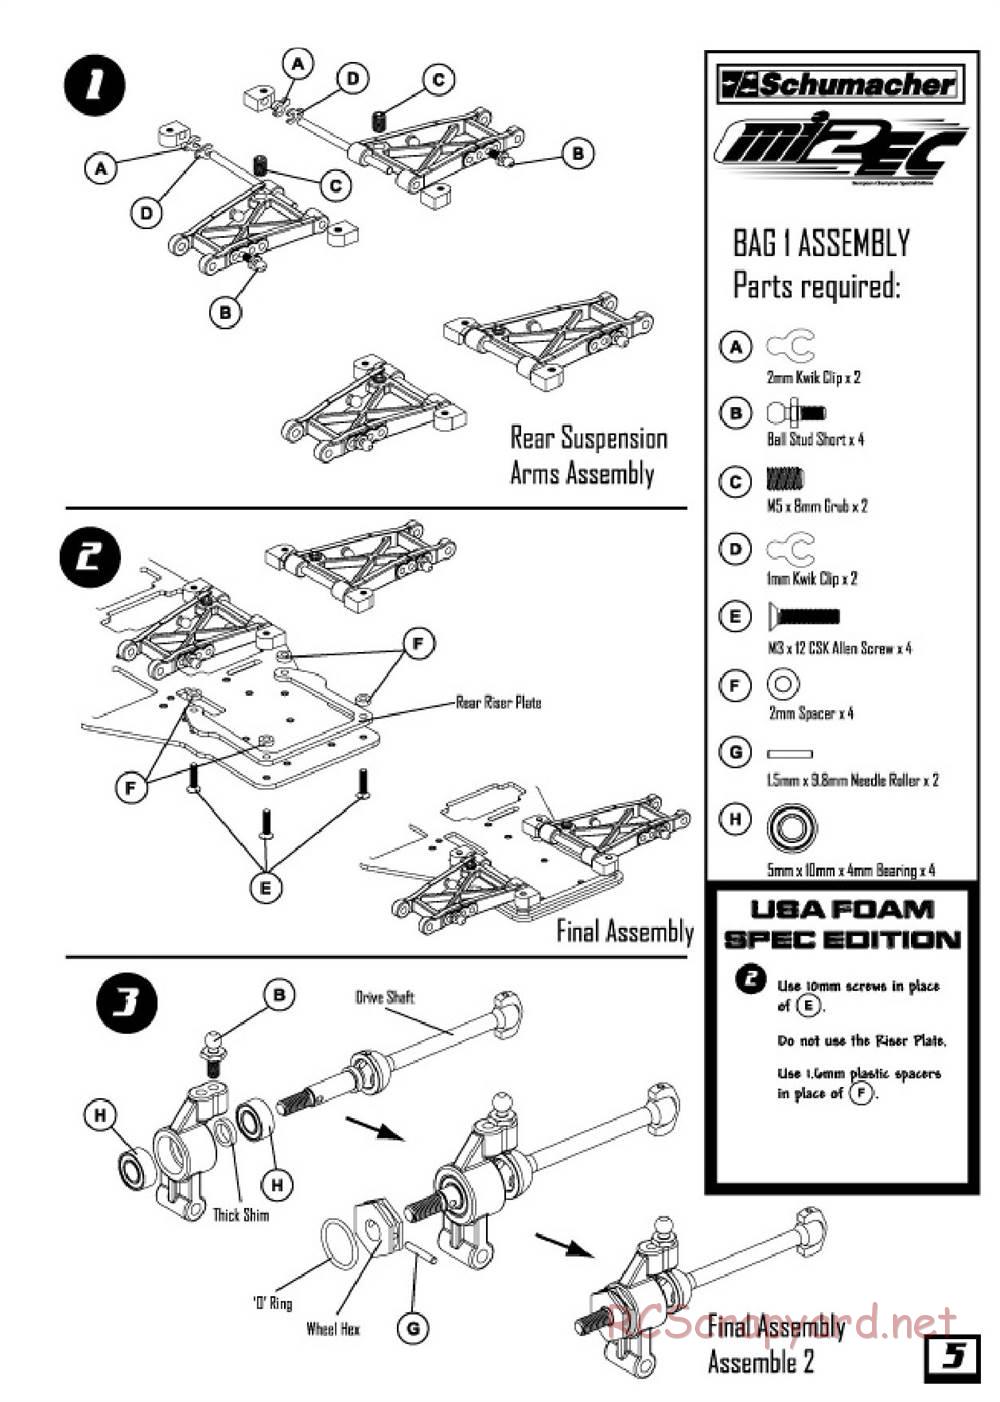 Schumacher - Mi2 EC - Manual - Page 7